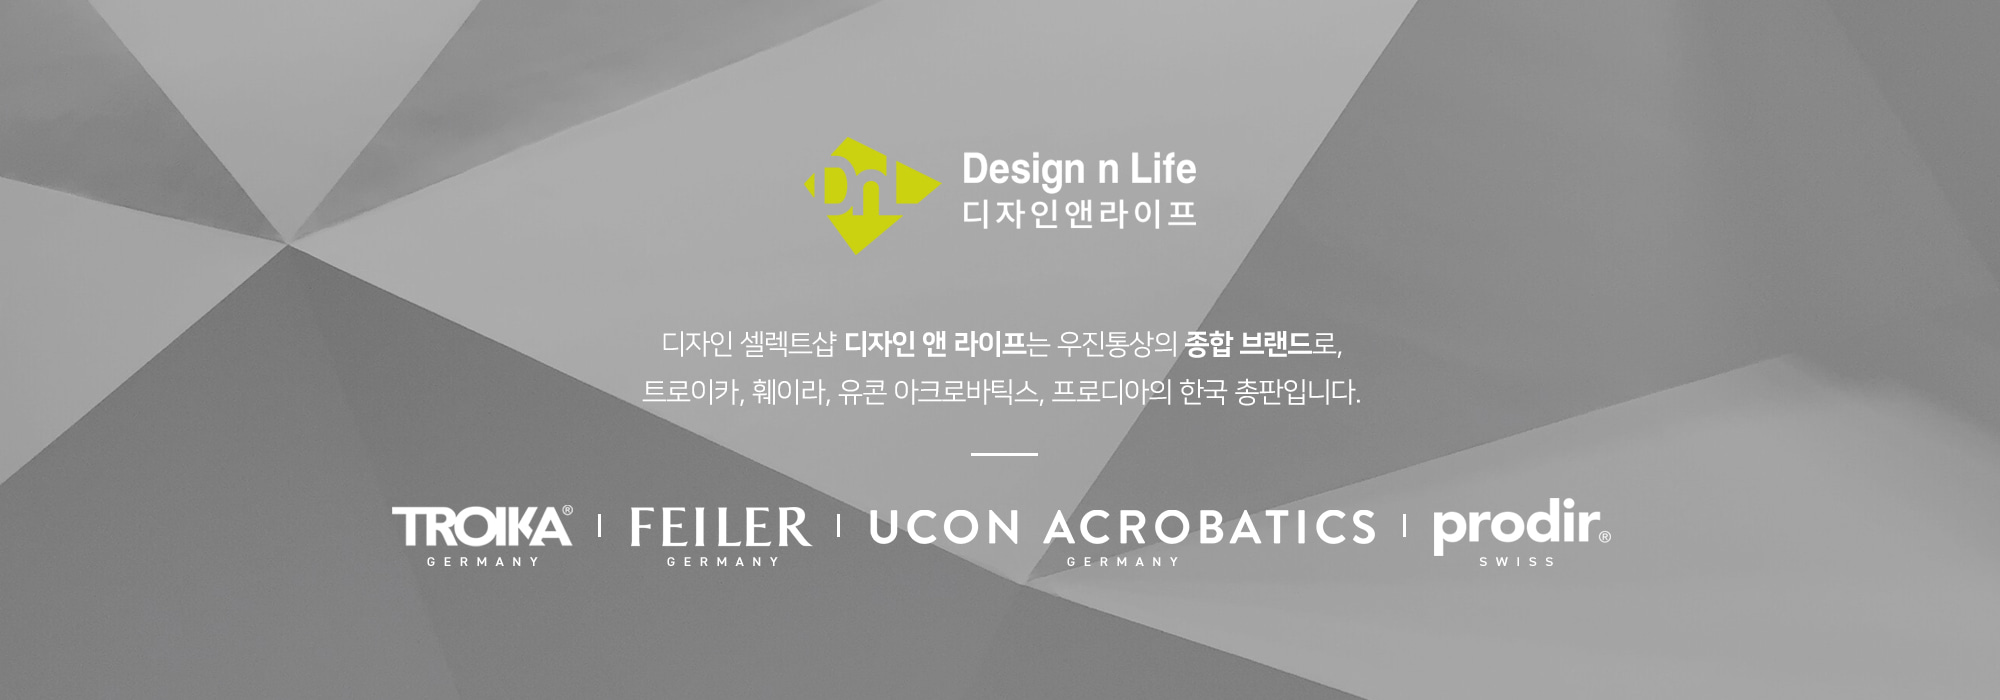 Design n Life